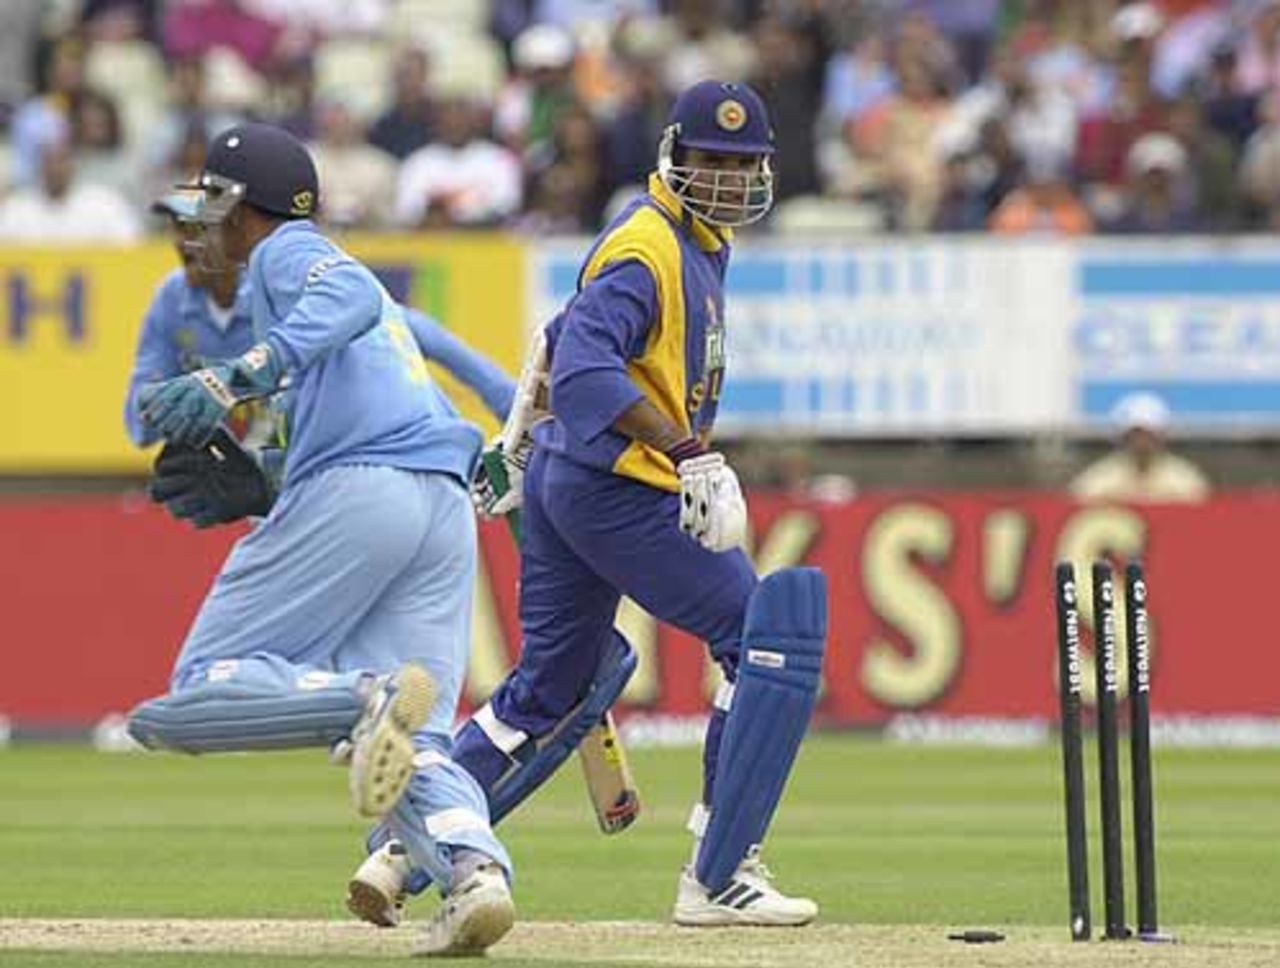 Atapattu is out stumped Dravid off the bowling of Kumble, India v Sri Lanka at Birmingham, July 2002